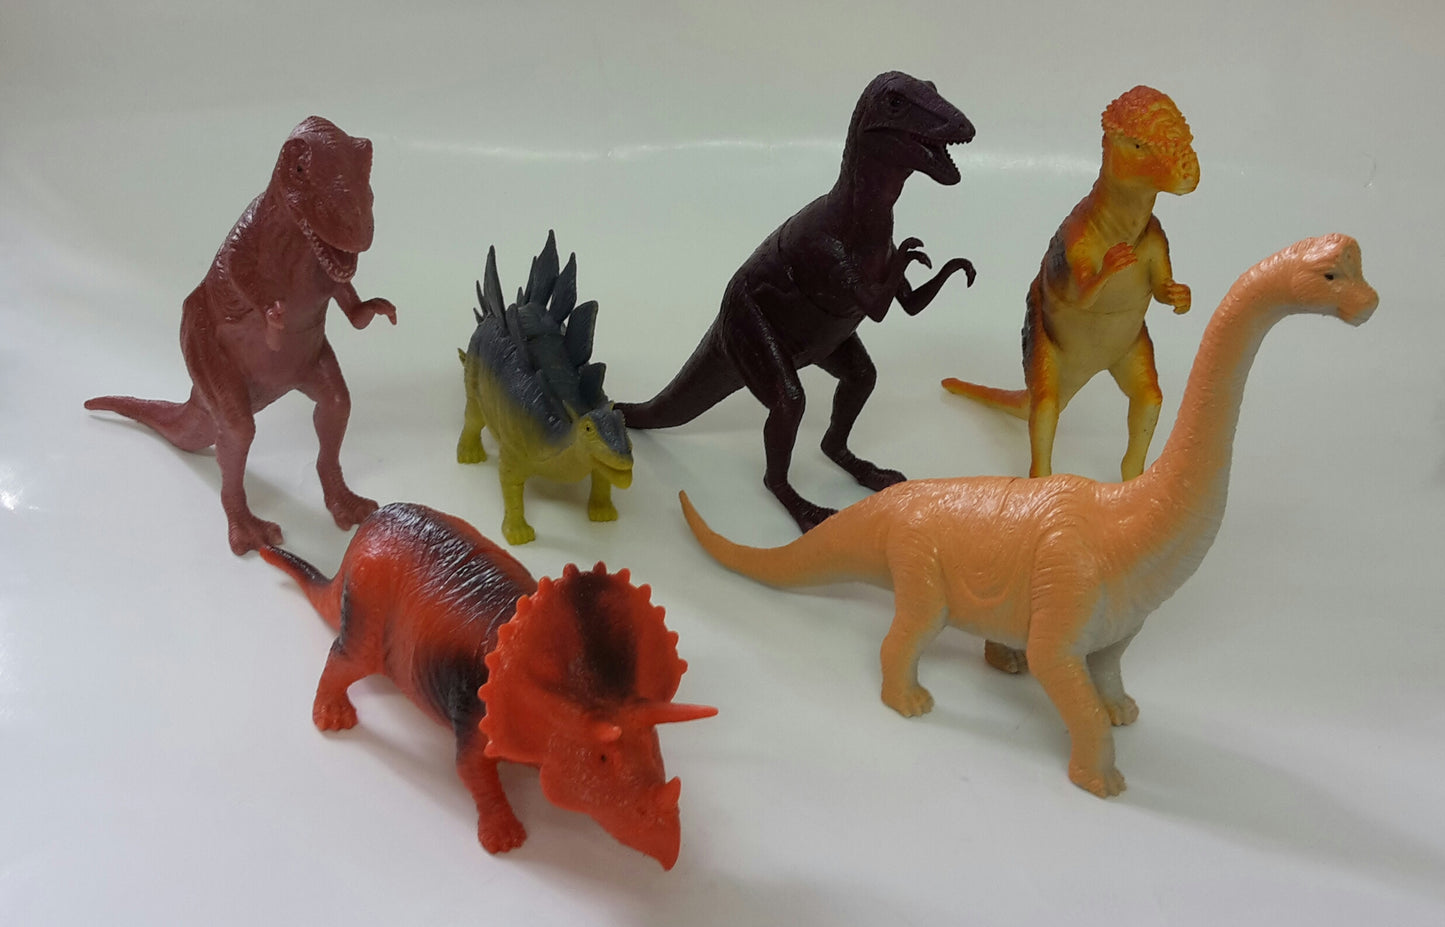 kidz-stuff-online - Dinosaurs in polybag